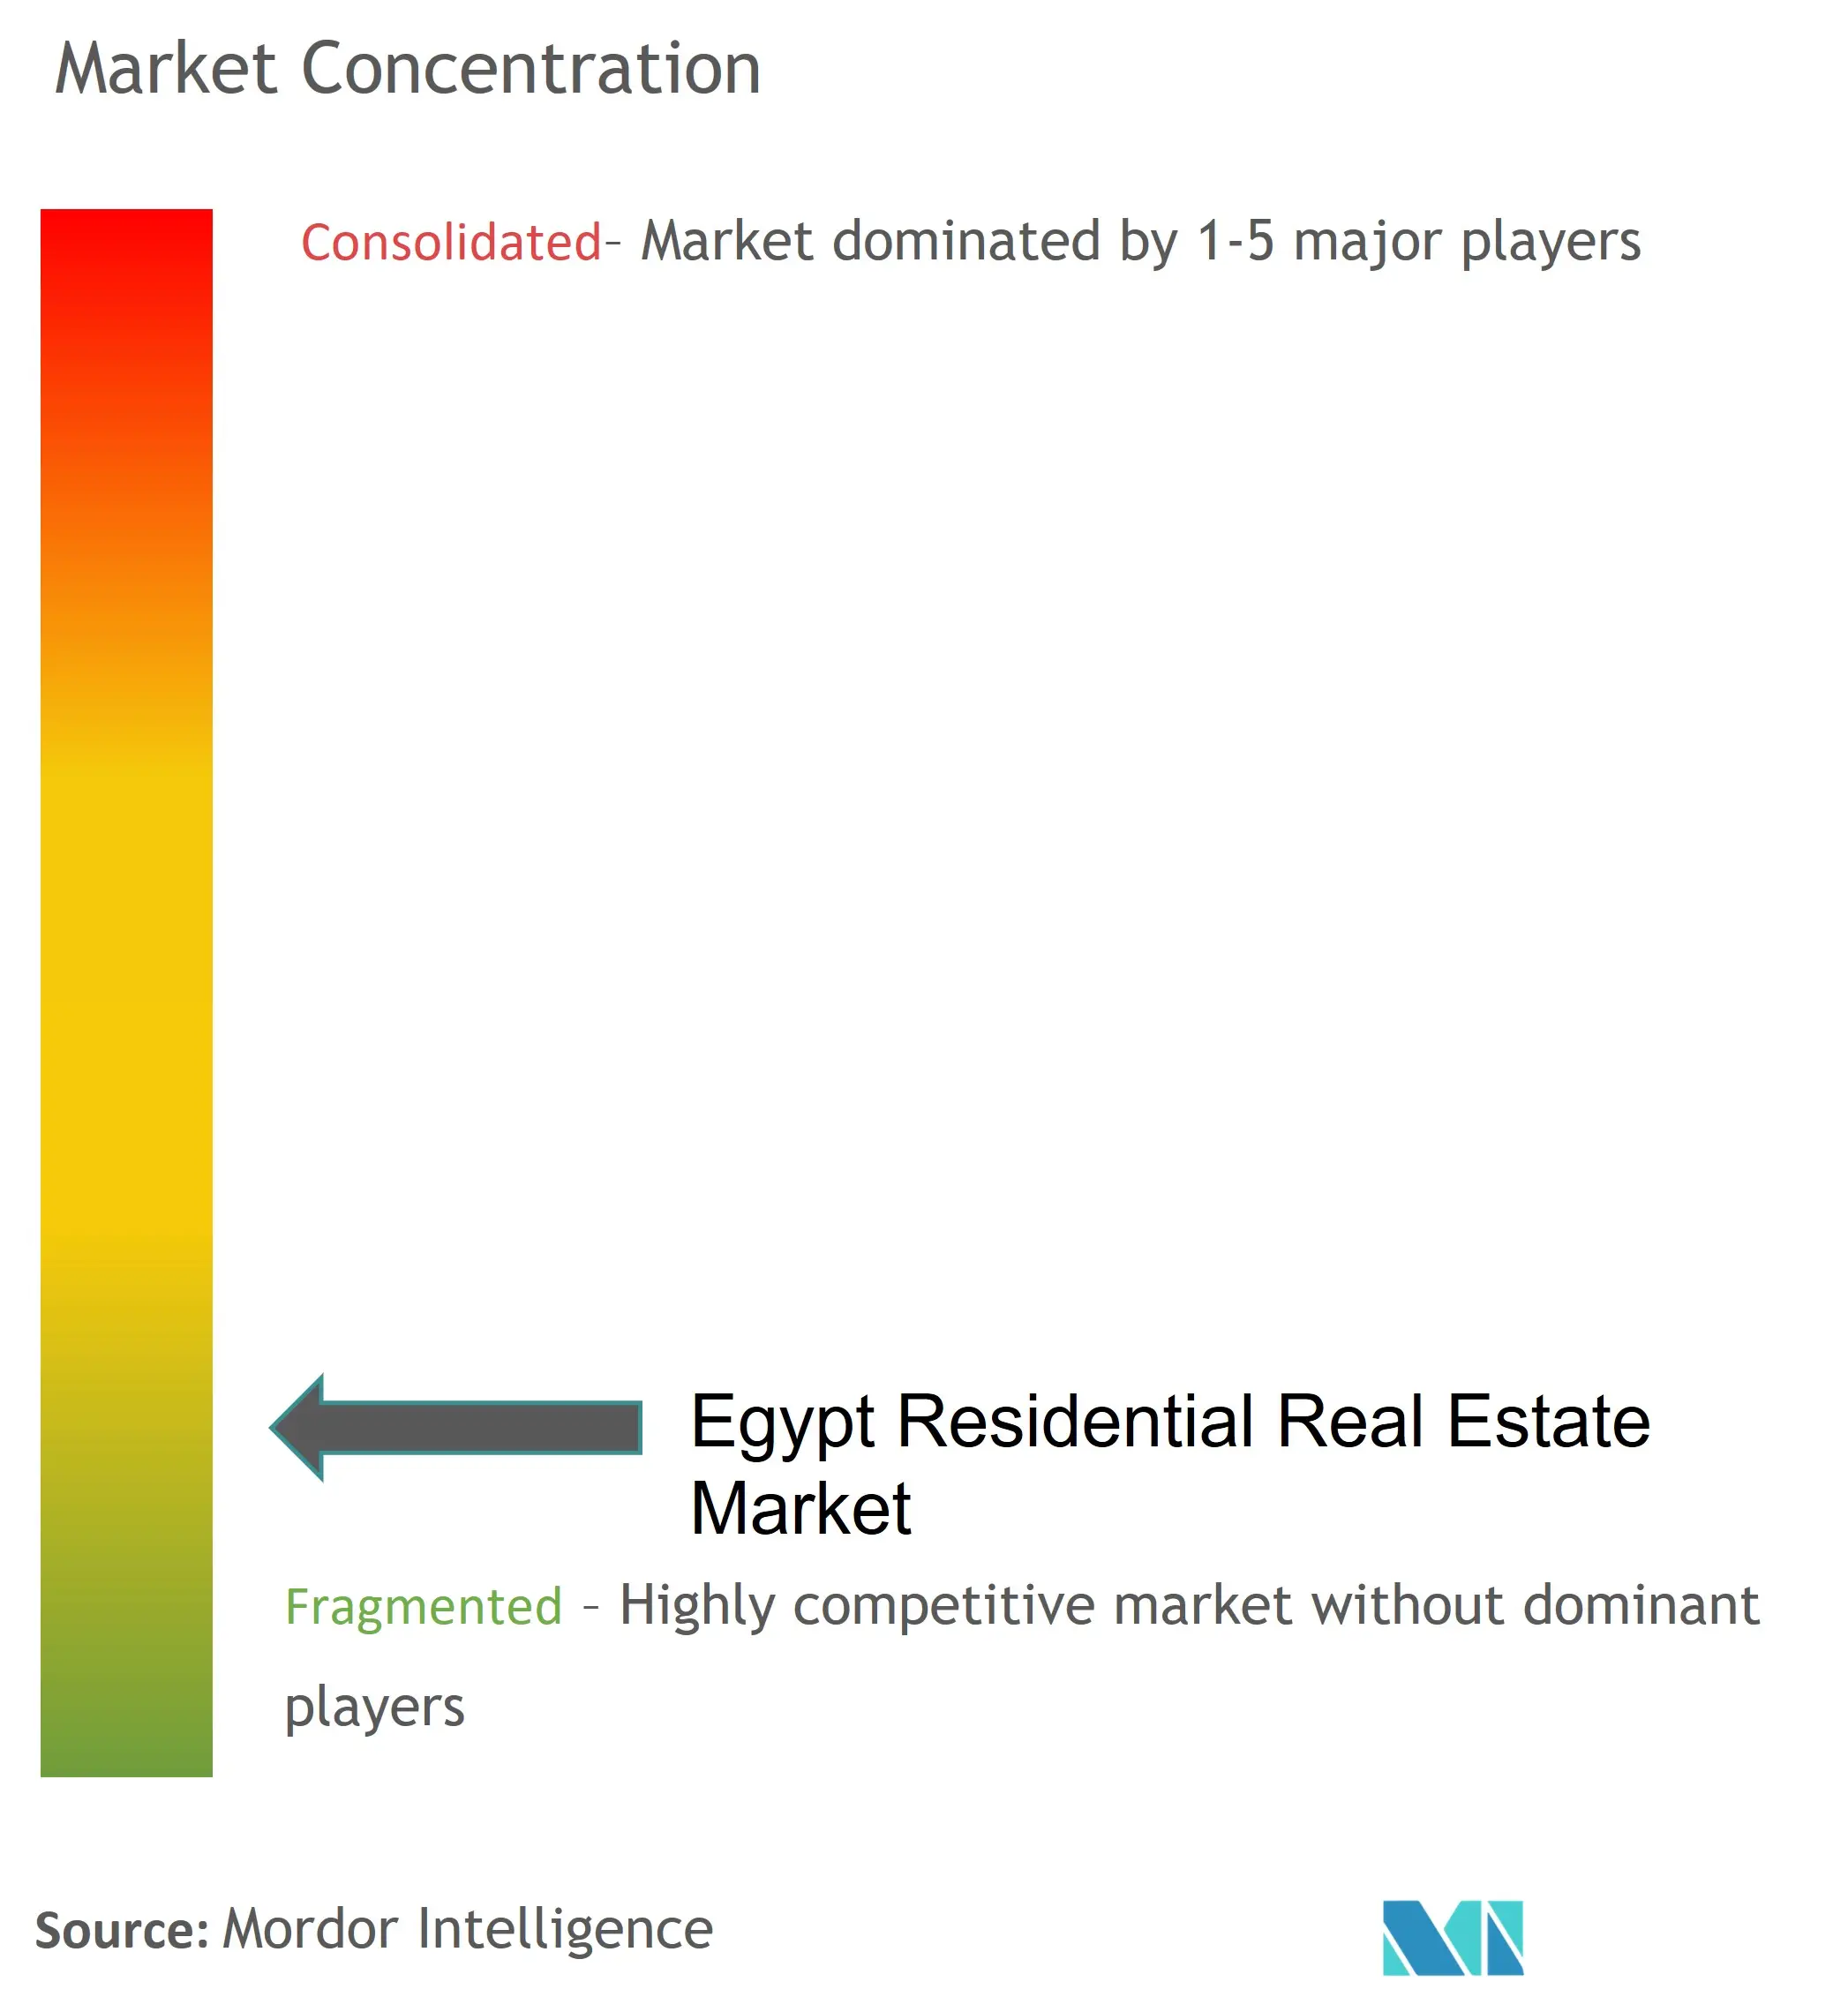 Egypt Residential Real Estate Market Concentration